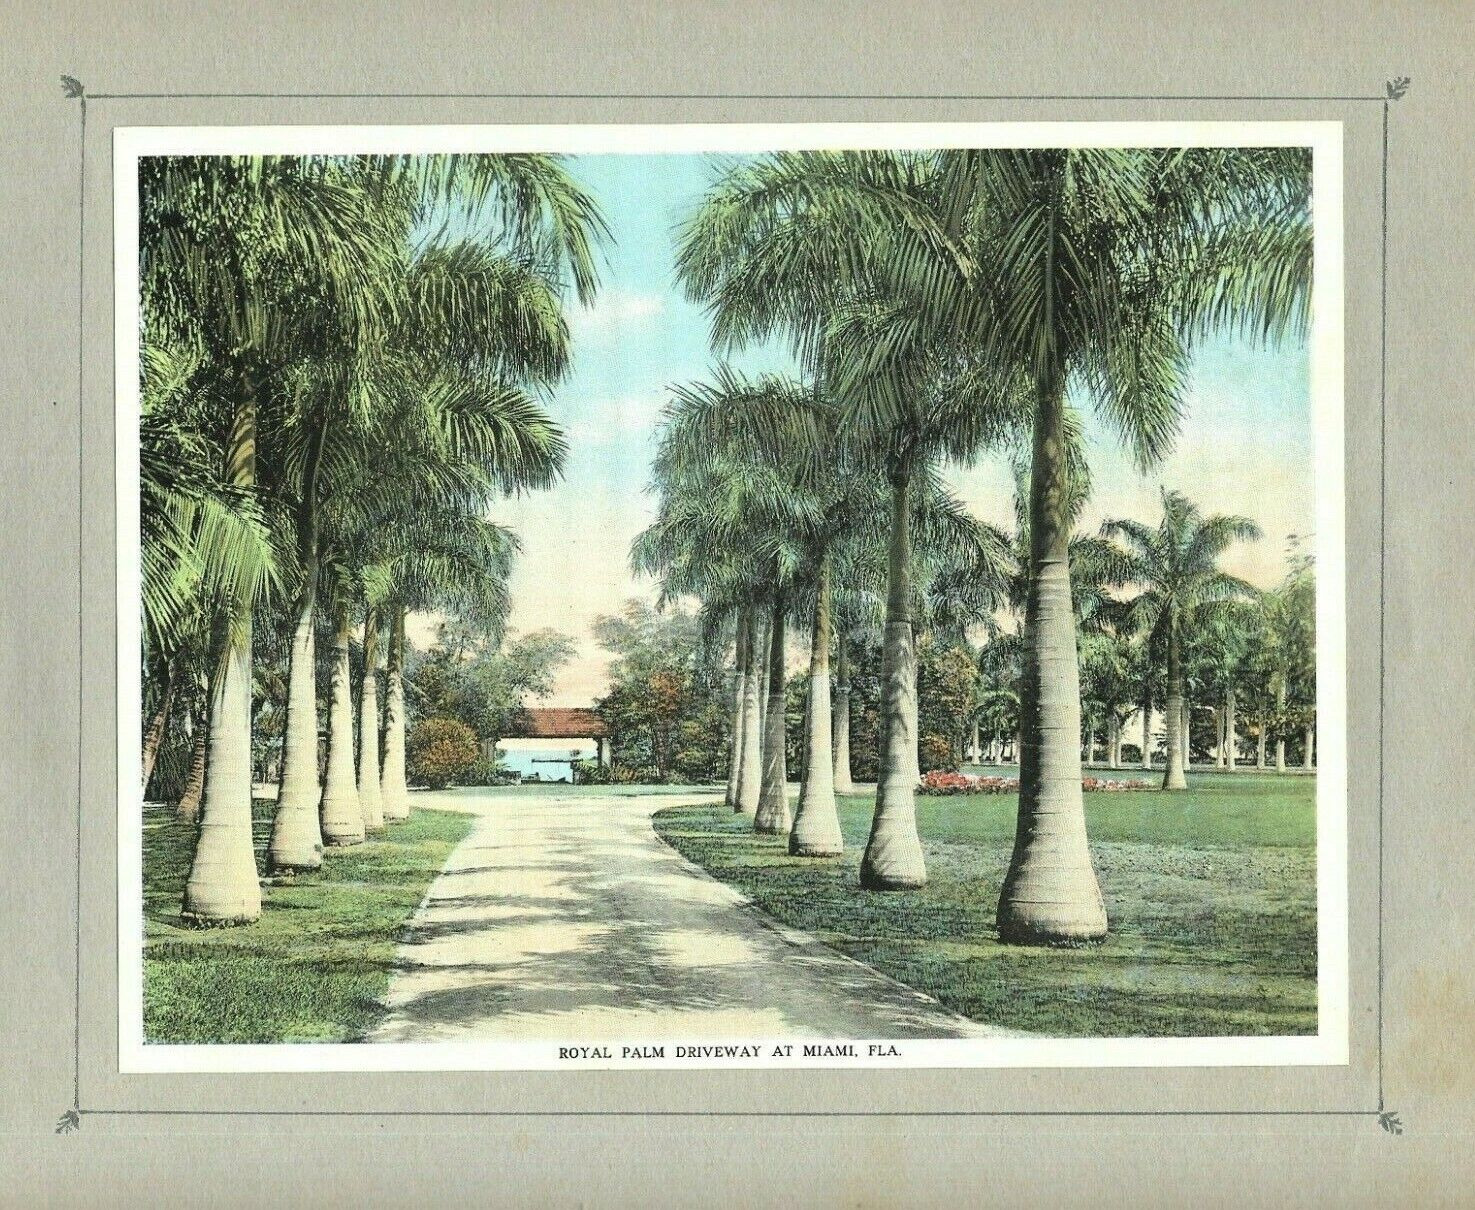 1920 orig print miami florida hotel royal palm driveway, 100 y o,  9x7 inch NICE